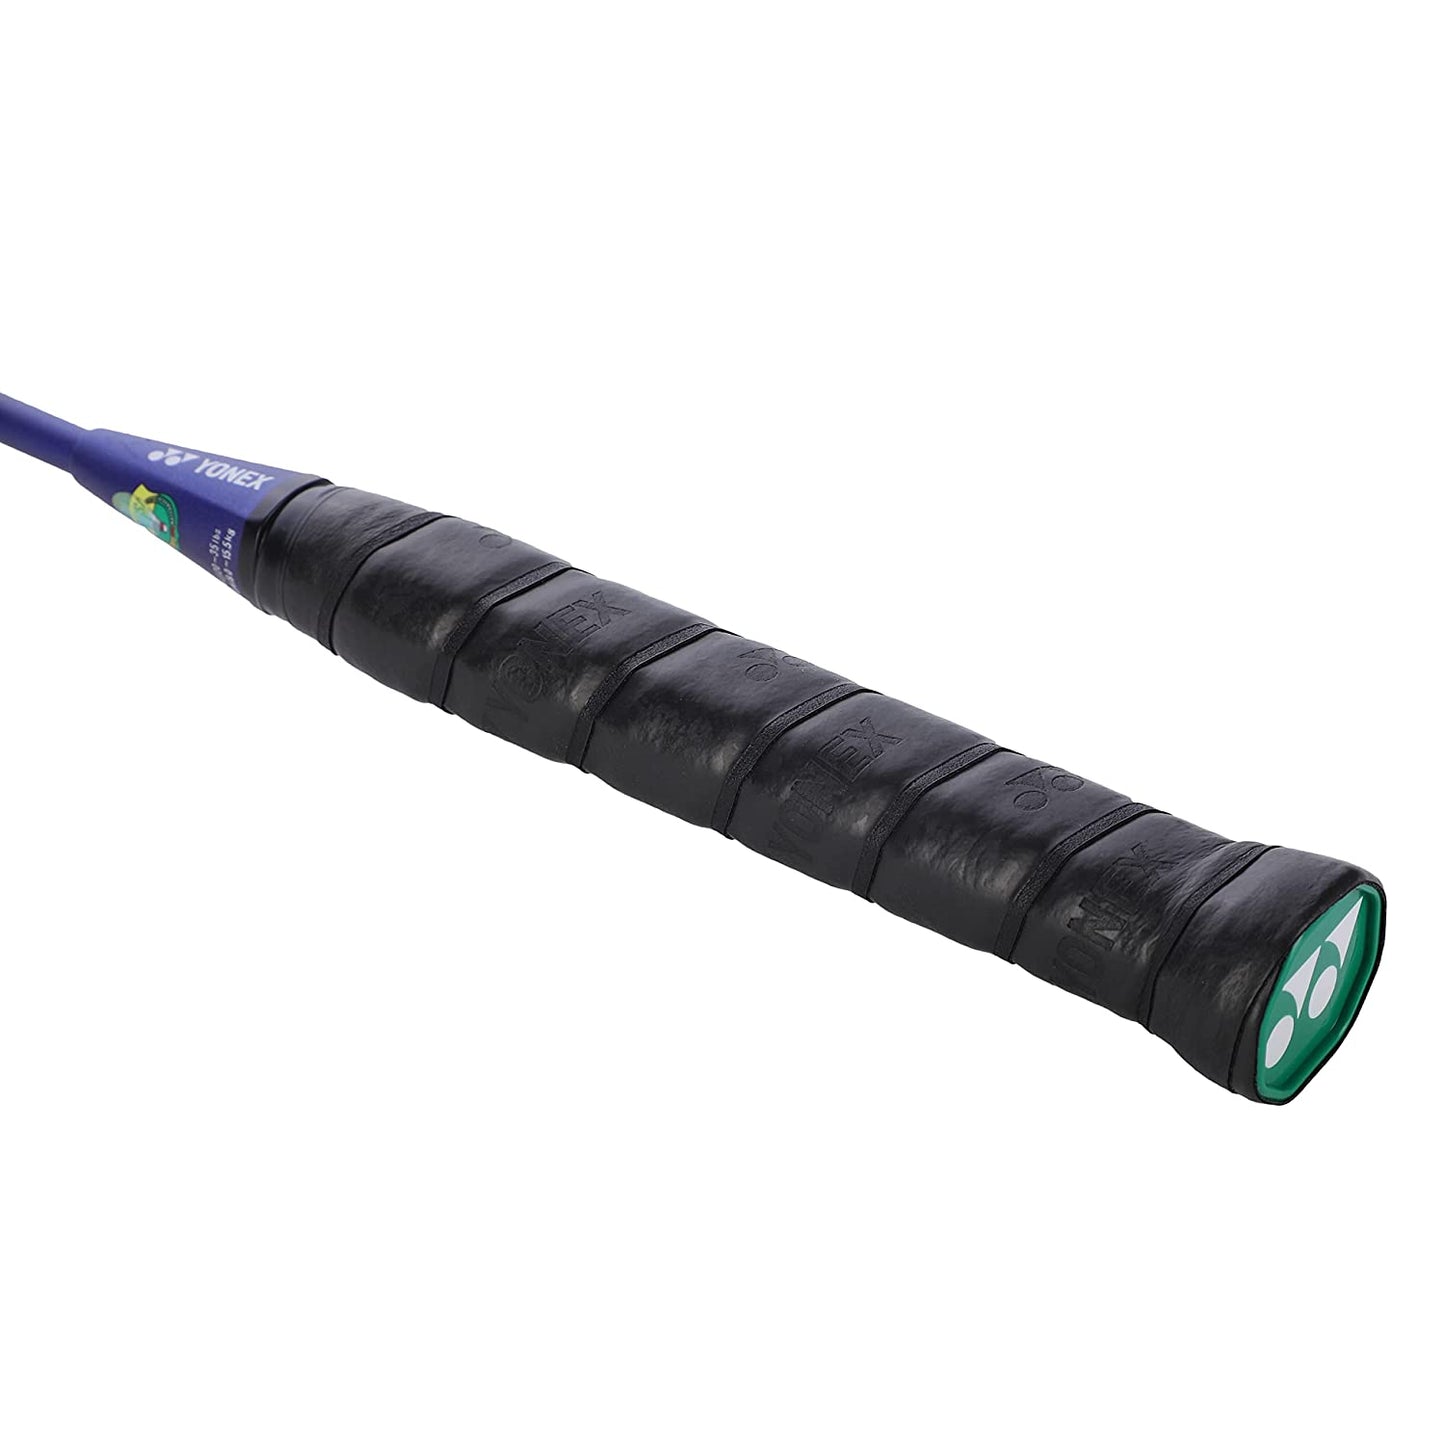 Yonex Astrox 10 DG (Navy Turquoise) Strung Badminton Racket